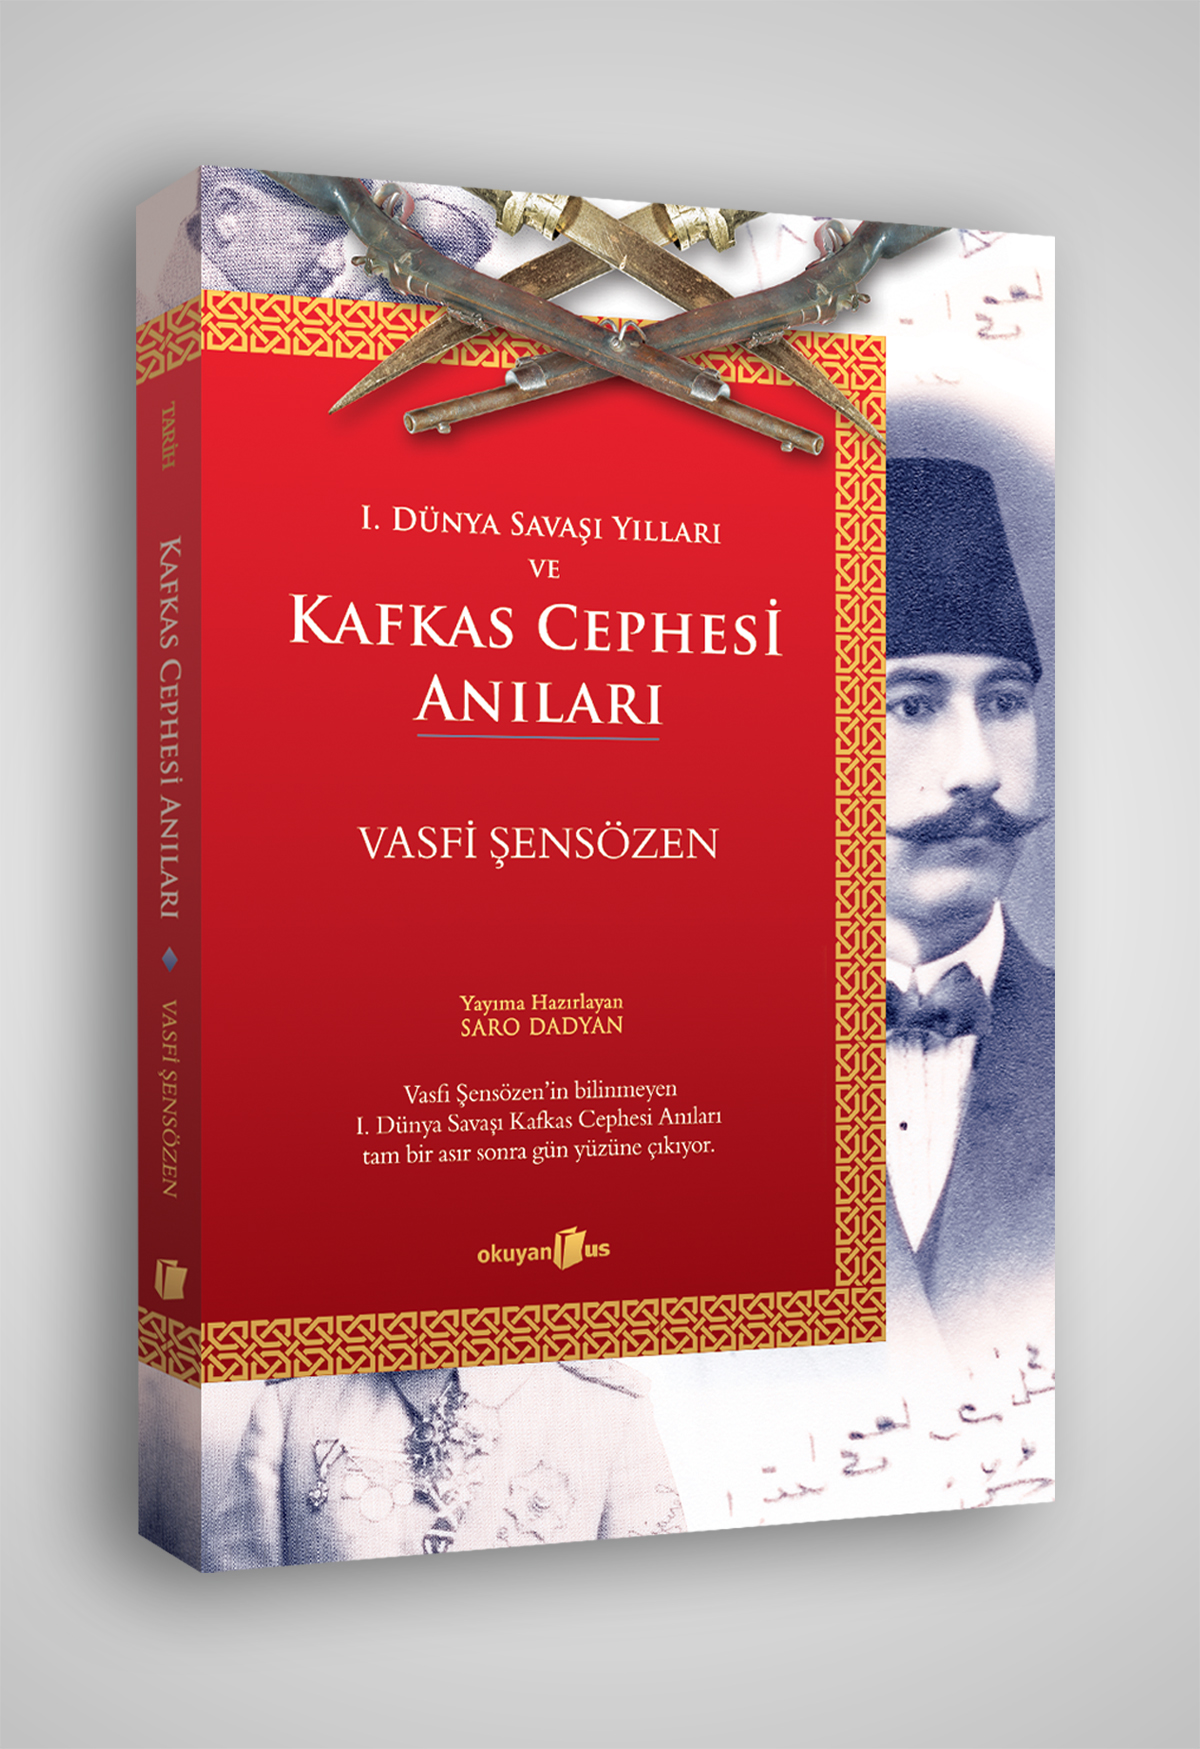 history book book cover historic ottoman oriental vintage cover design luxury gold border portrait